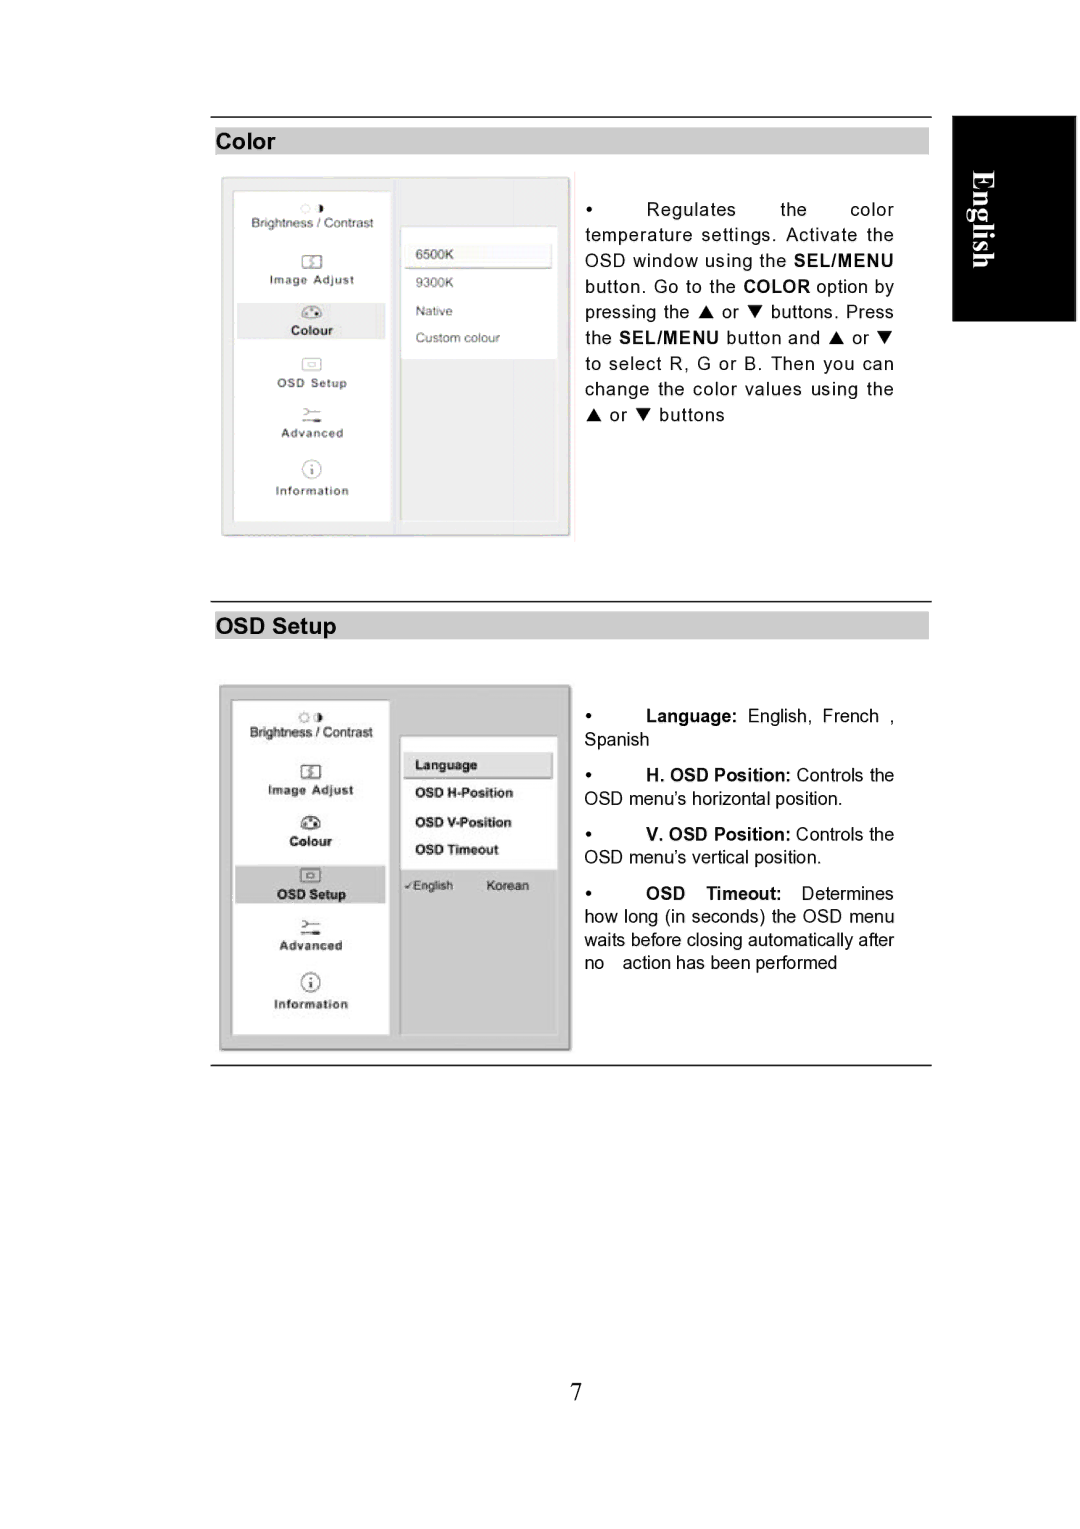 Envision Peripherals LCD manual Color, OSD Setup 